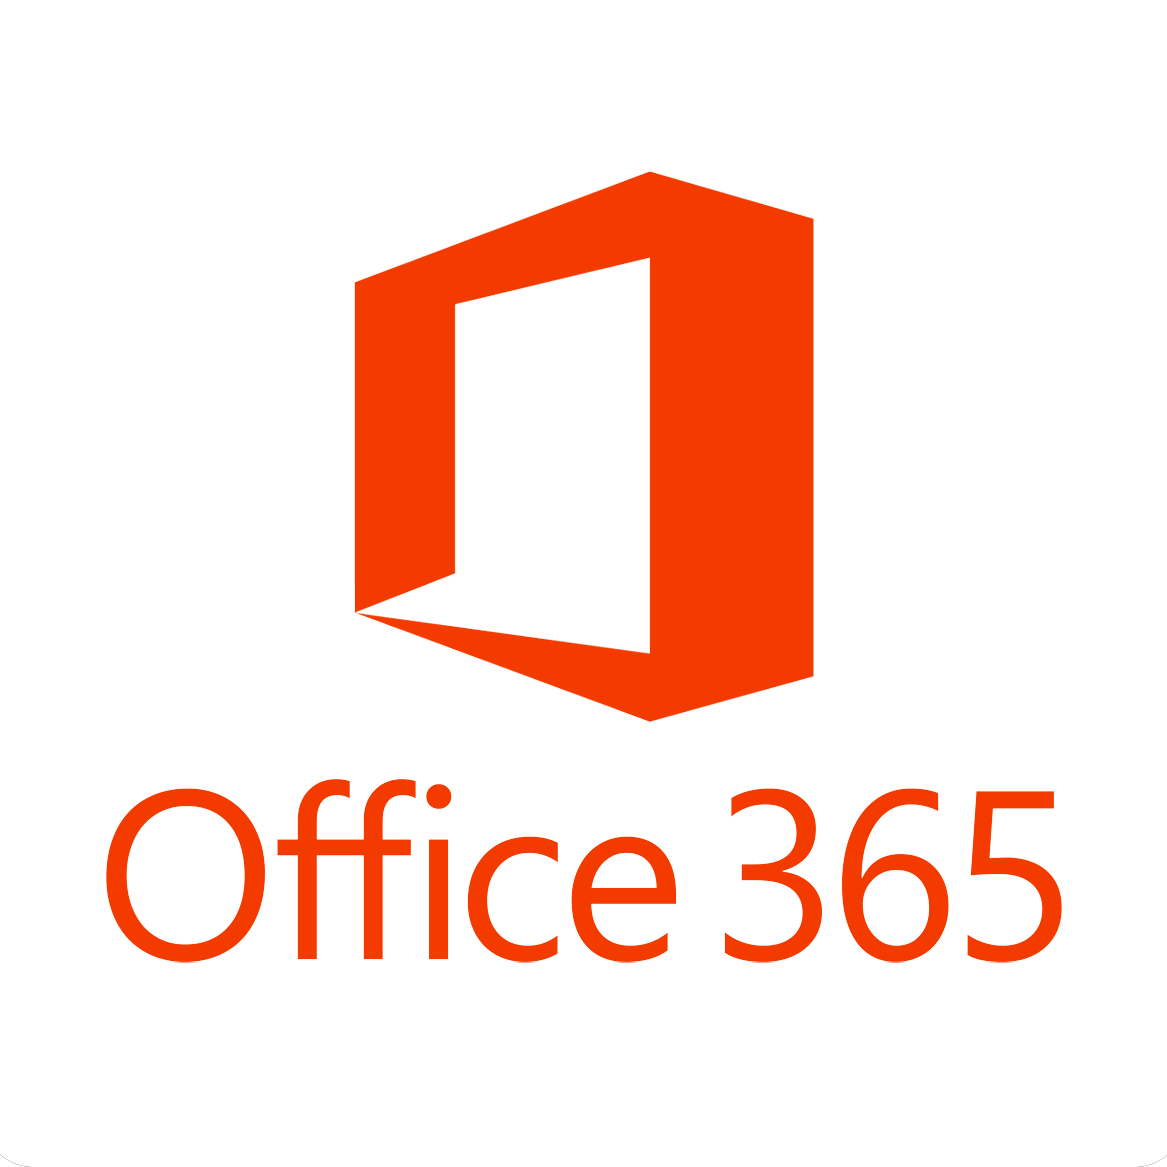 Microsoft-Office-365 (1)2